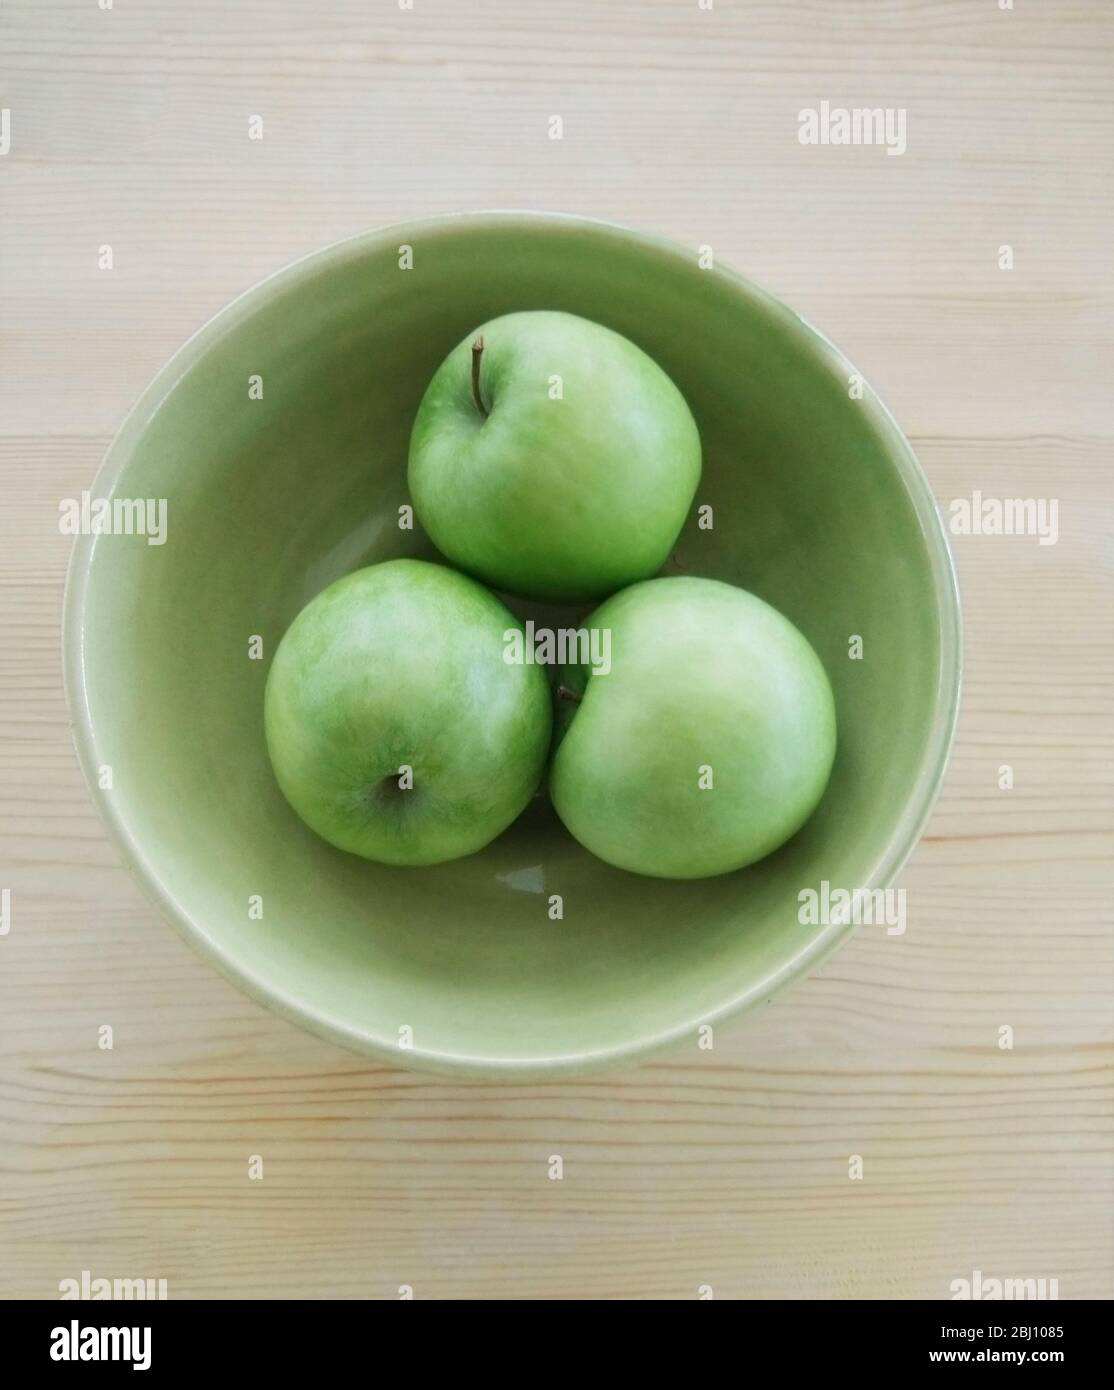 Three green Granny Smith apples in green pottery bowl Stock Photo